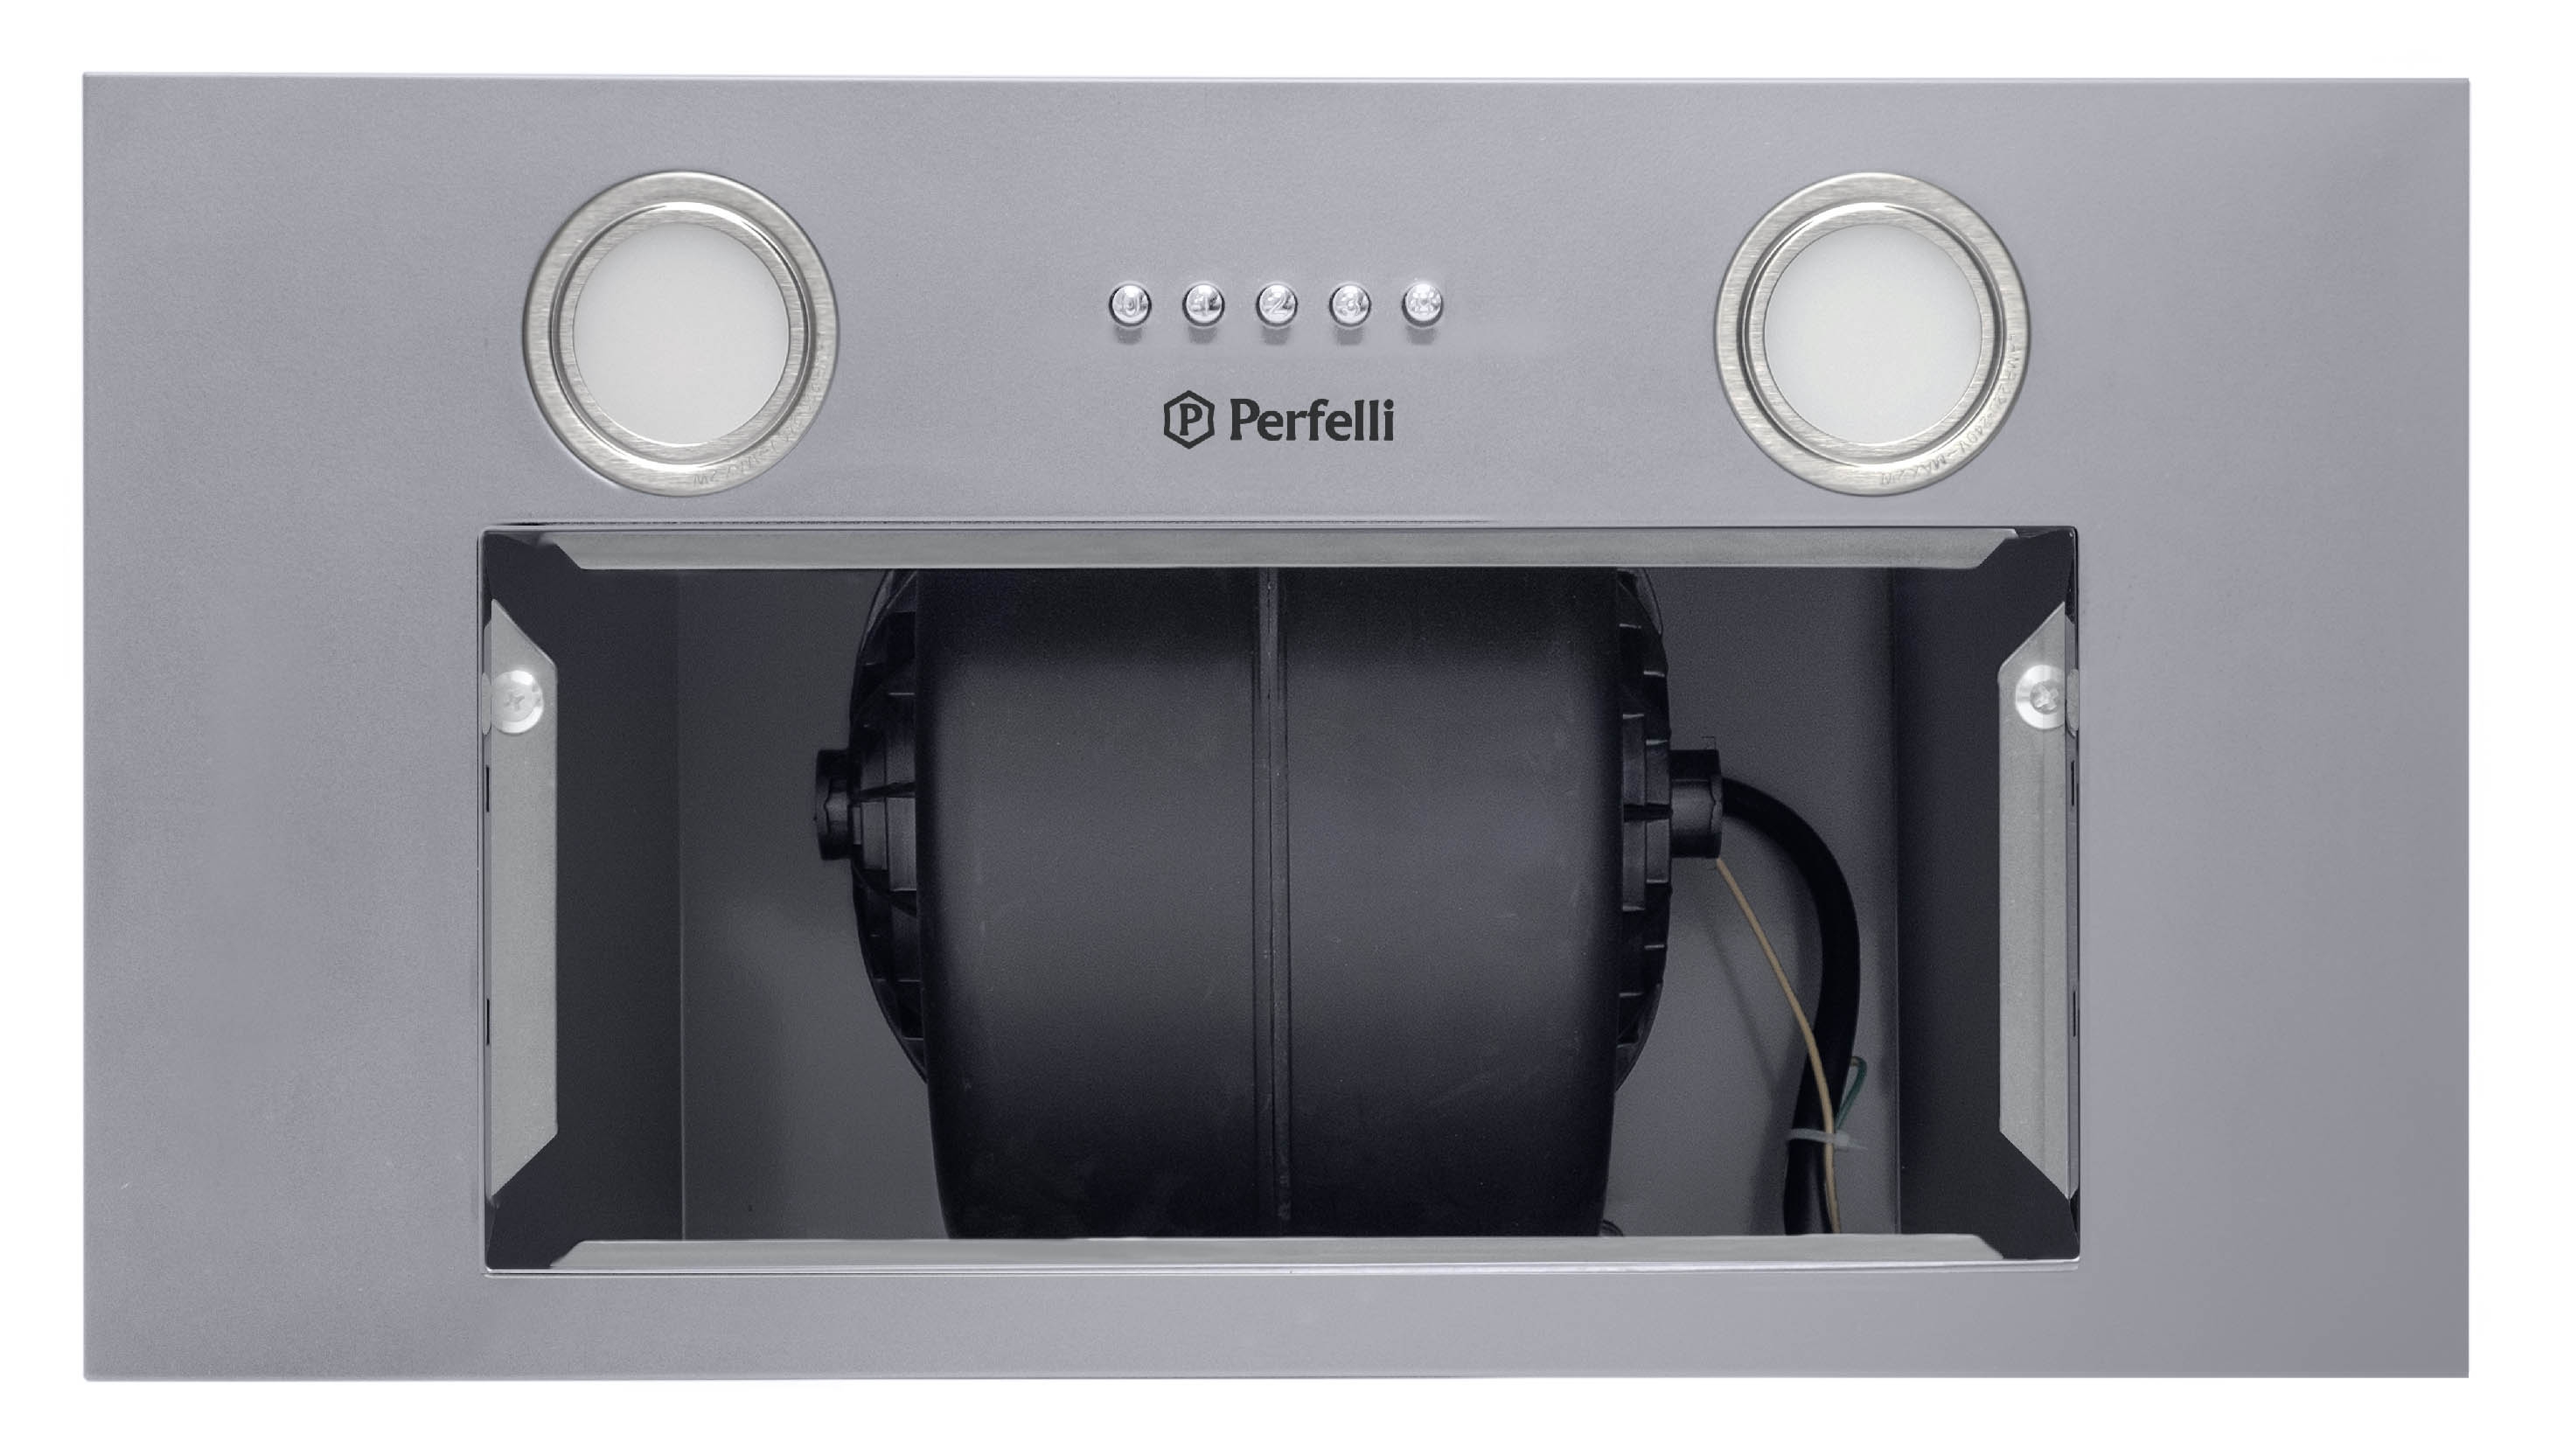 Кухонная вытяжка Perfelli BI 5652 I 1000 LED характеристики - фотография 7